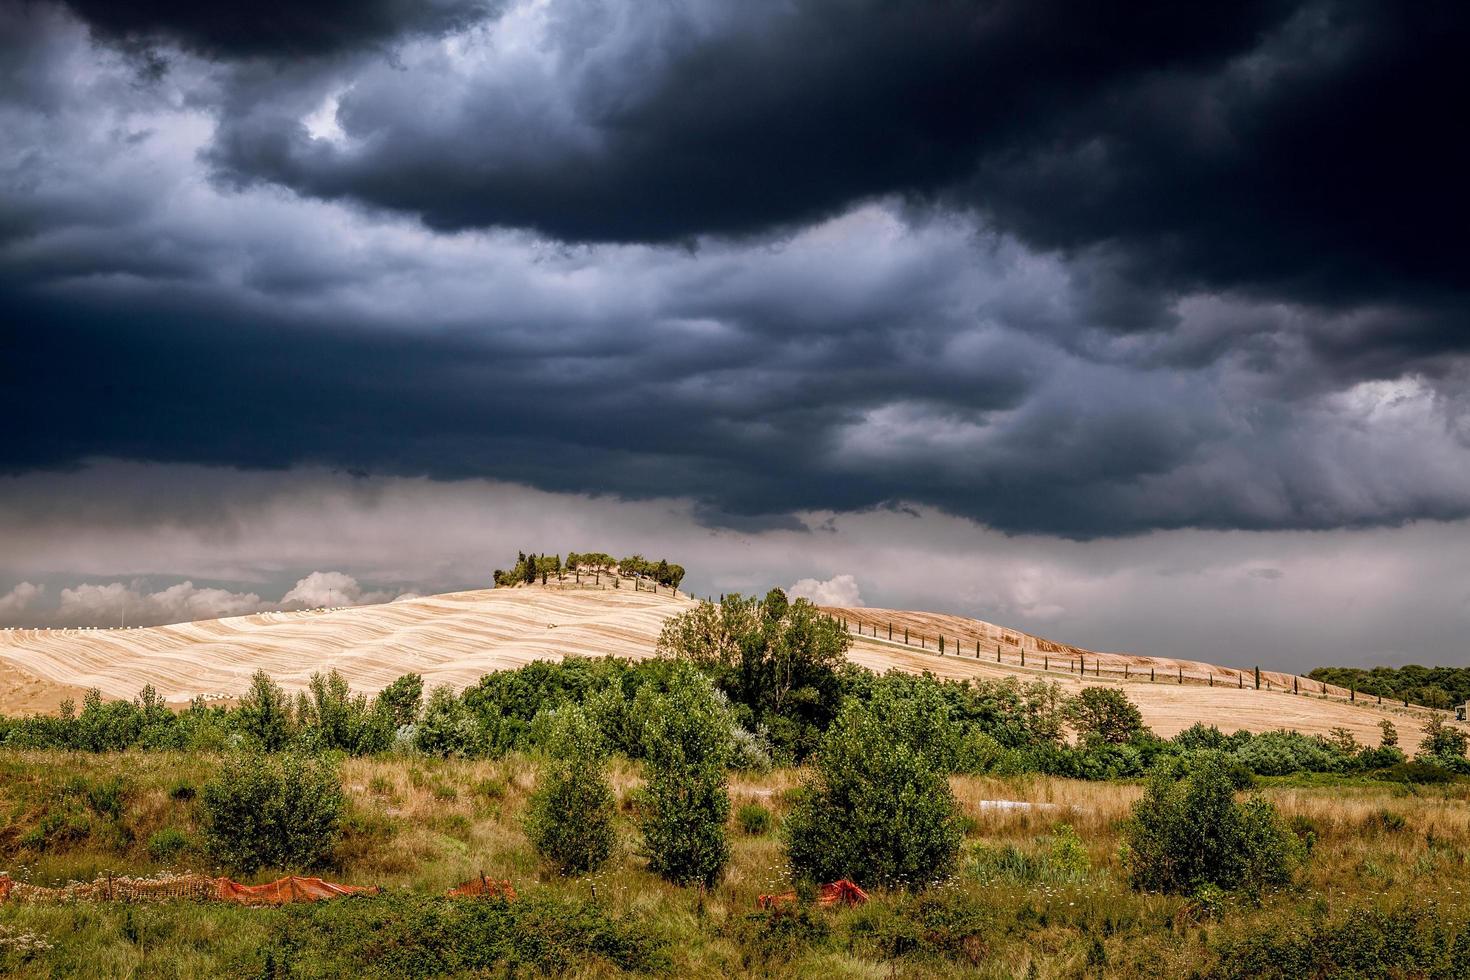 Toscana, Italia, 2020 - casa en una colina con nubes de tormenta foto